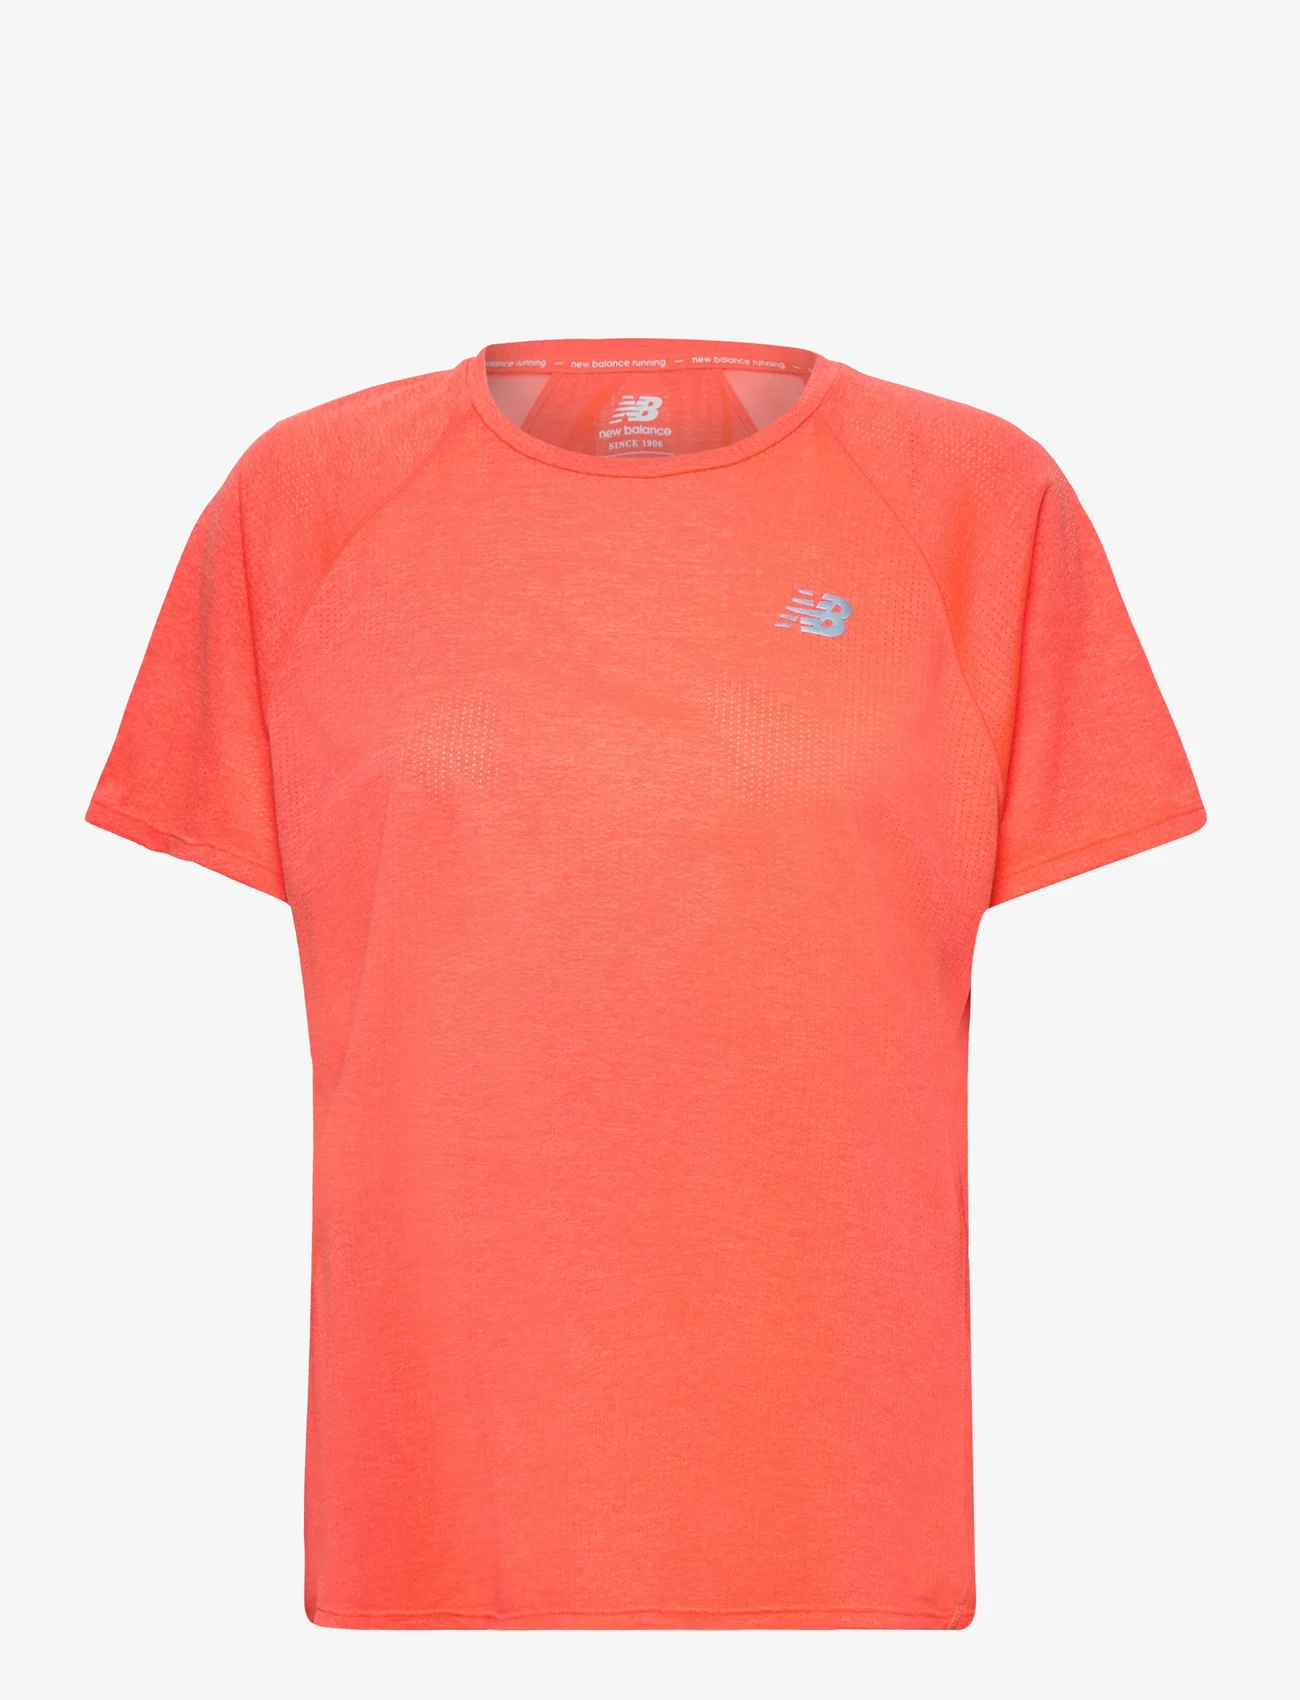 New Balance - Impact Run Short Sleeve - t-shirts - neon dragonfly heather - 0